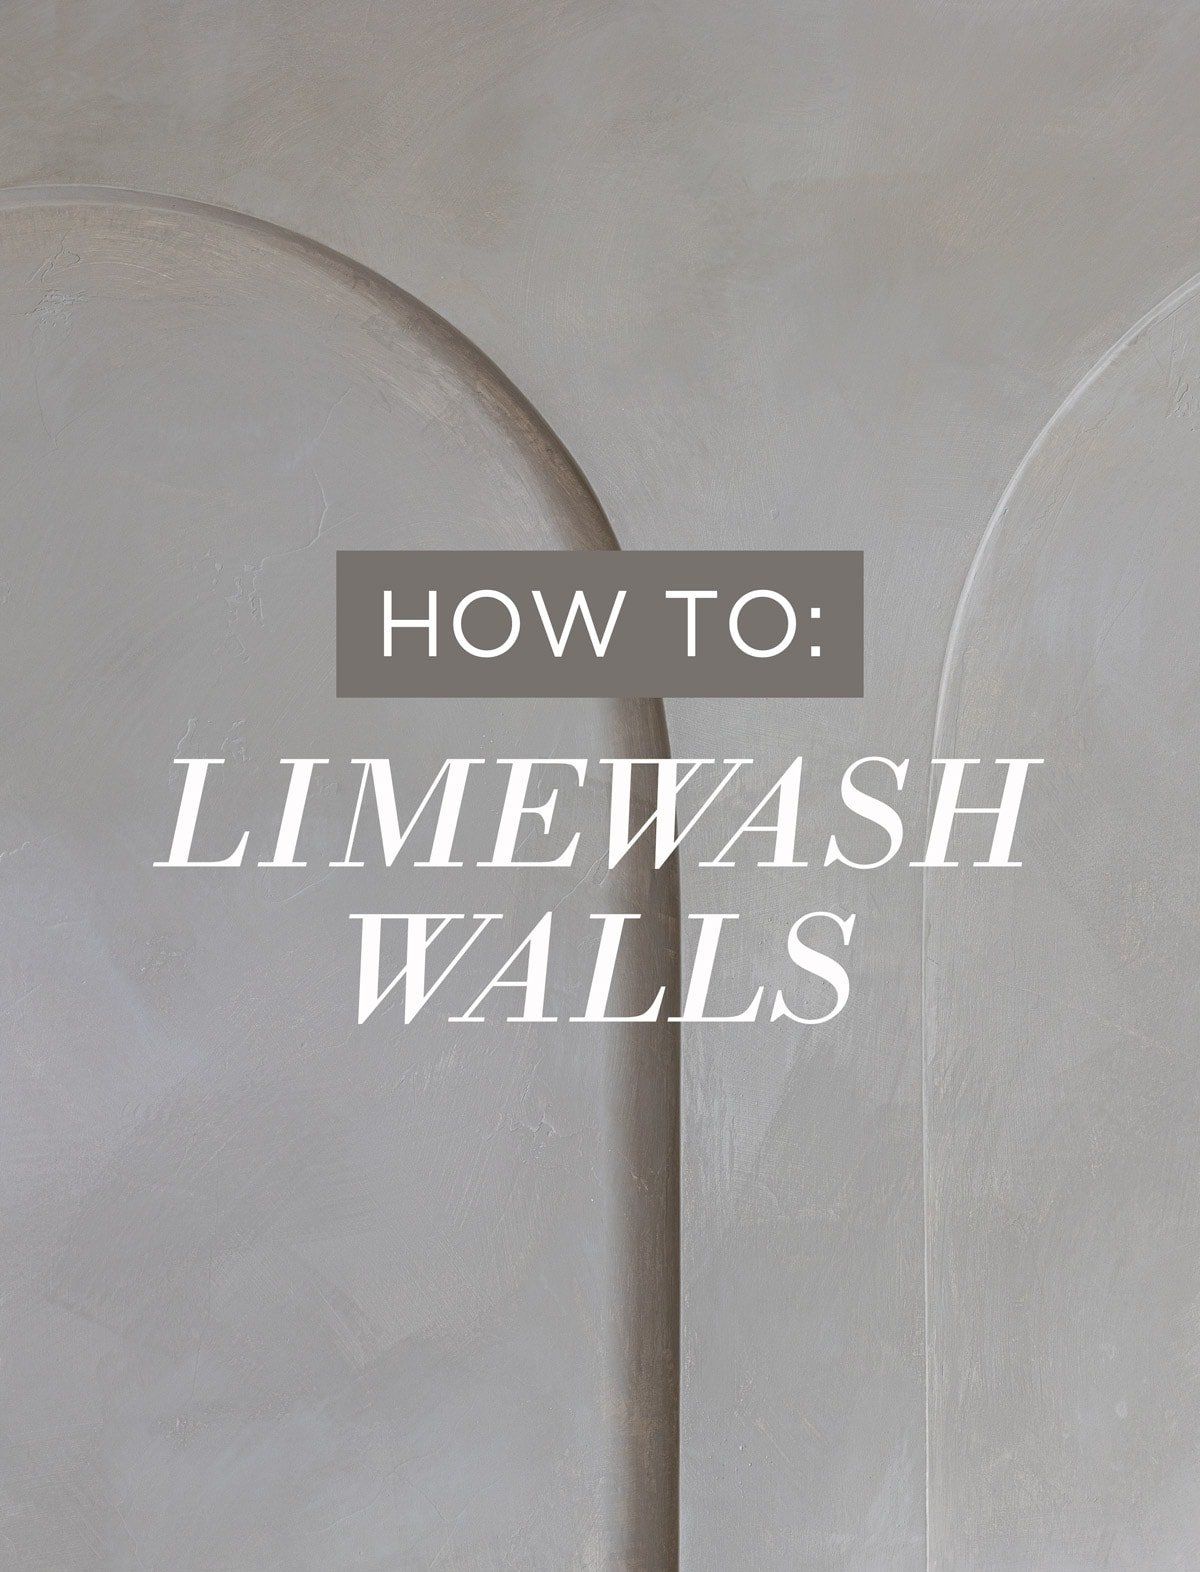 how to limewash walls tutorial